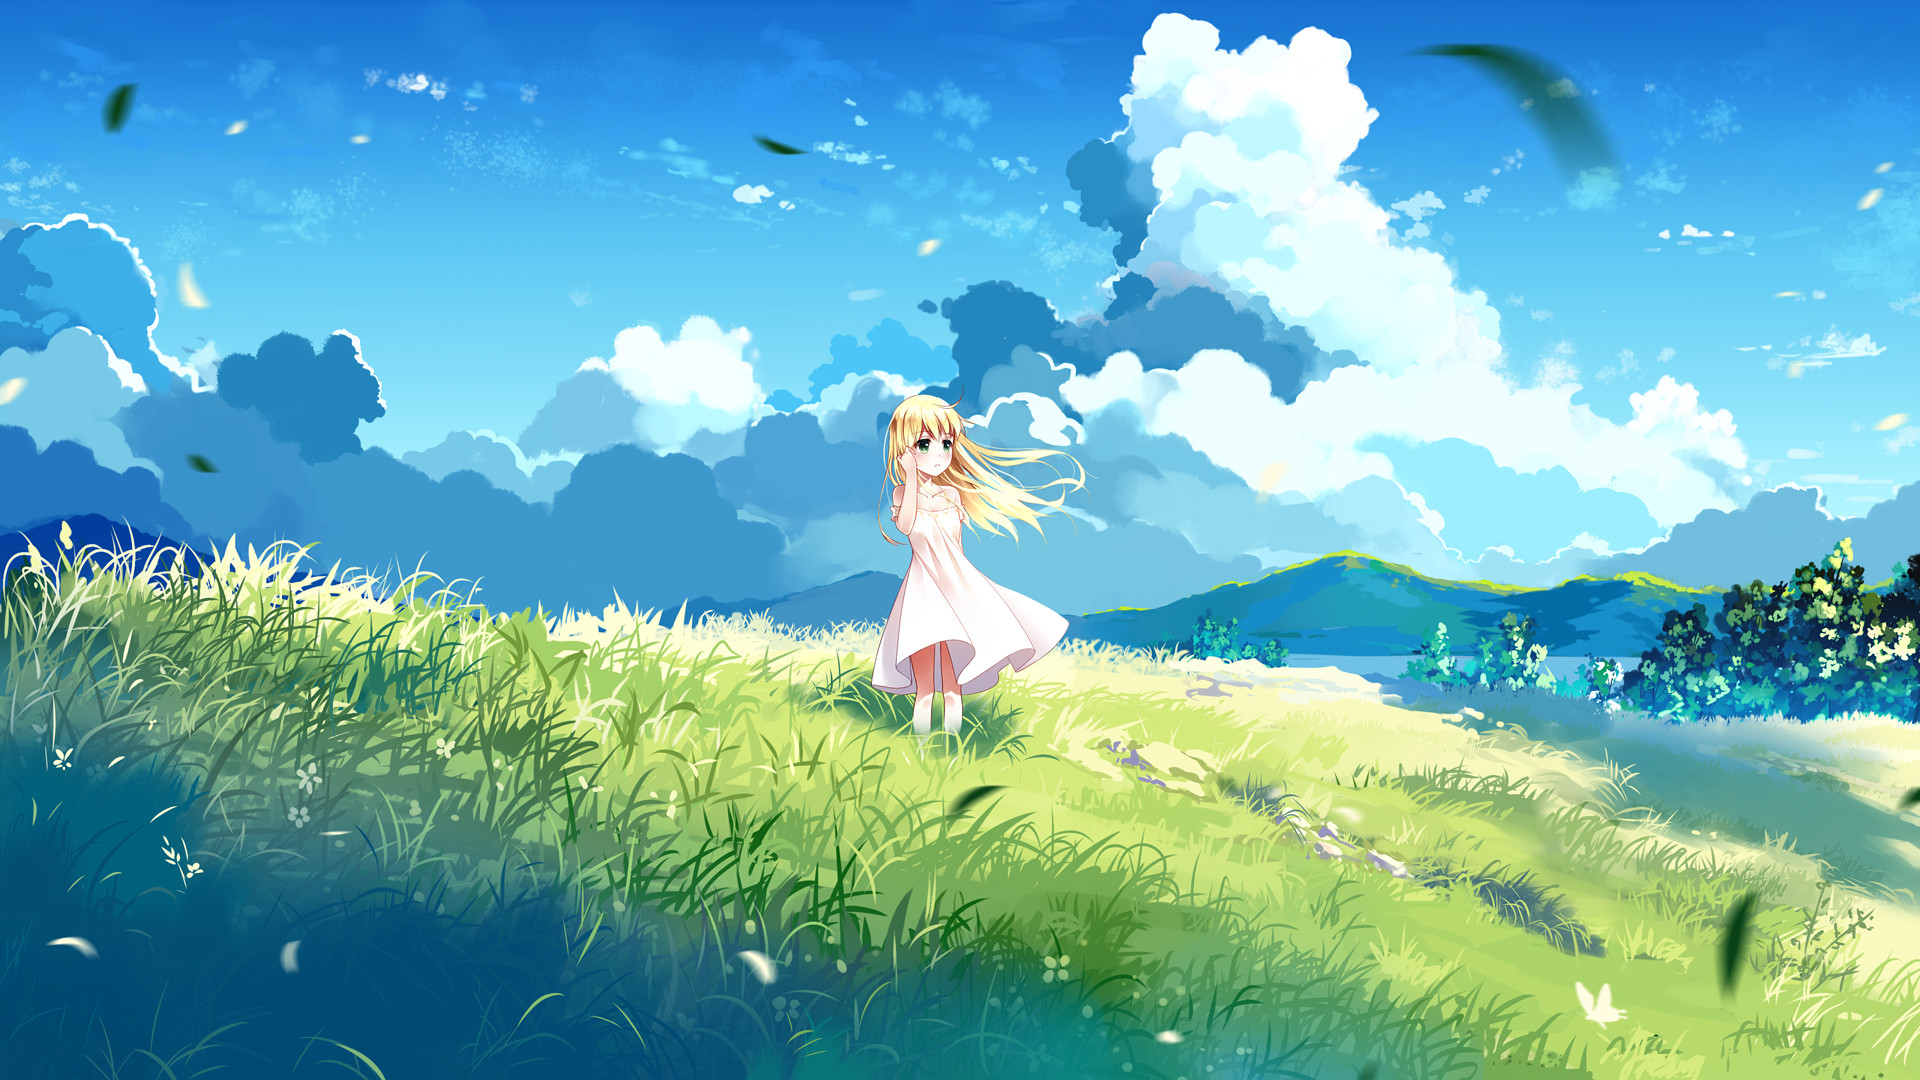 Wallpaper Landscape, blonde anime girl, clouds, outdoor, cute